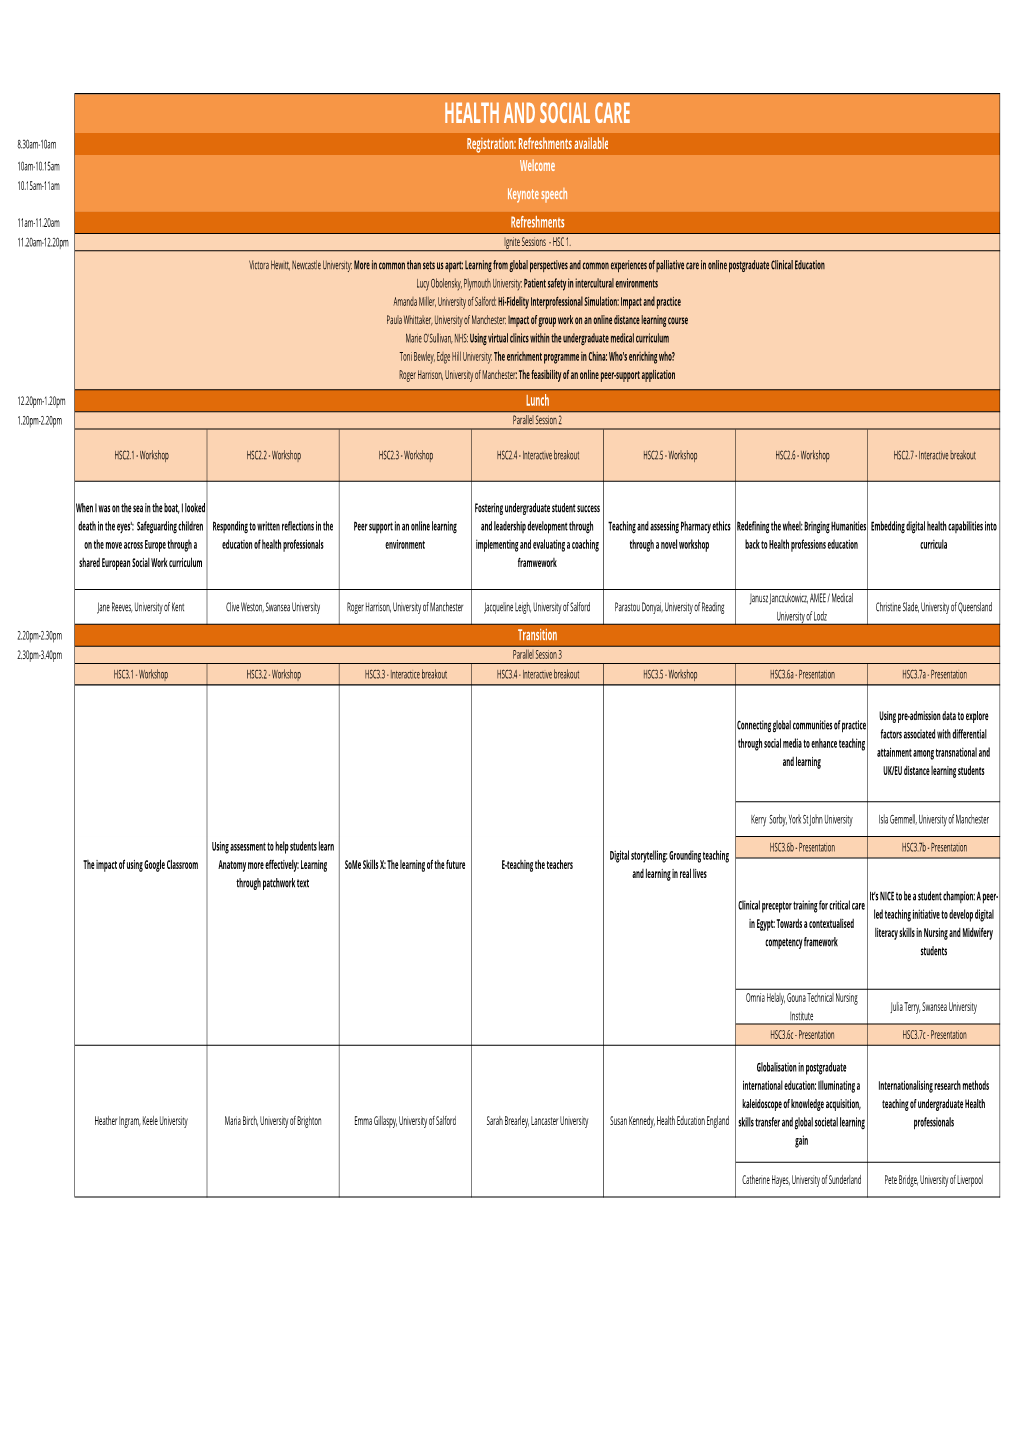 Draft Conference Programme DRAFT 12022018.Xlsx